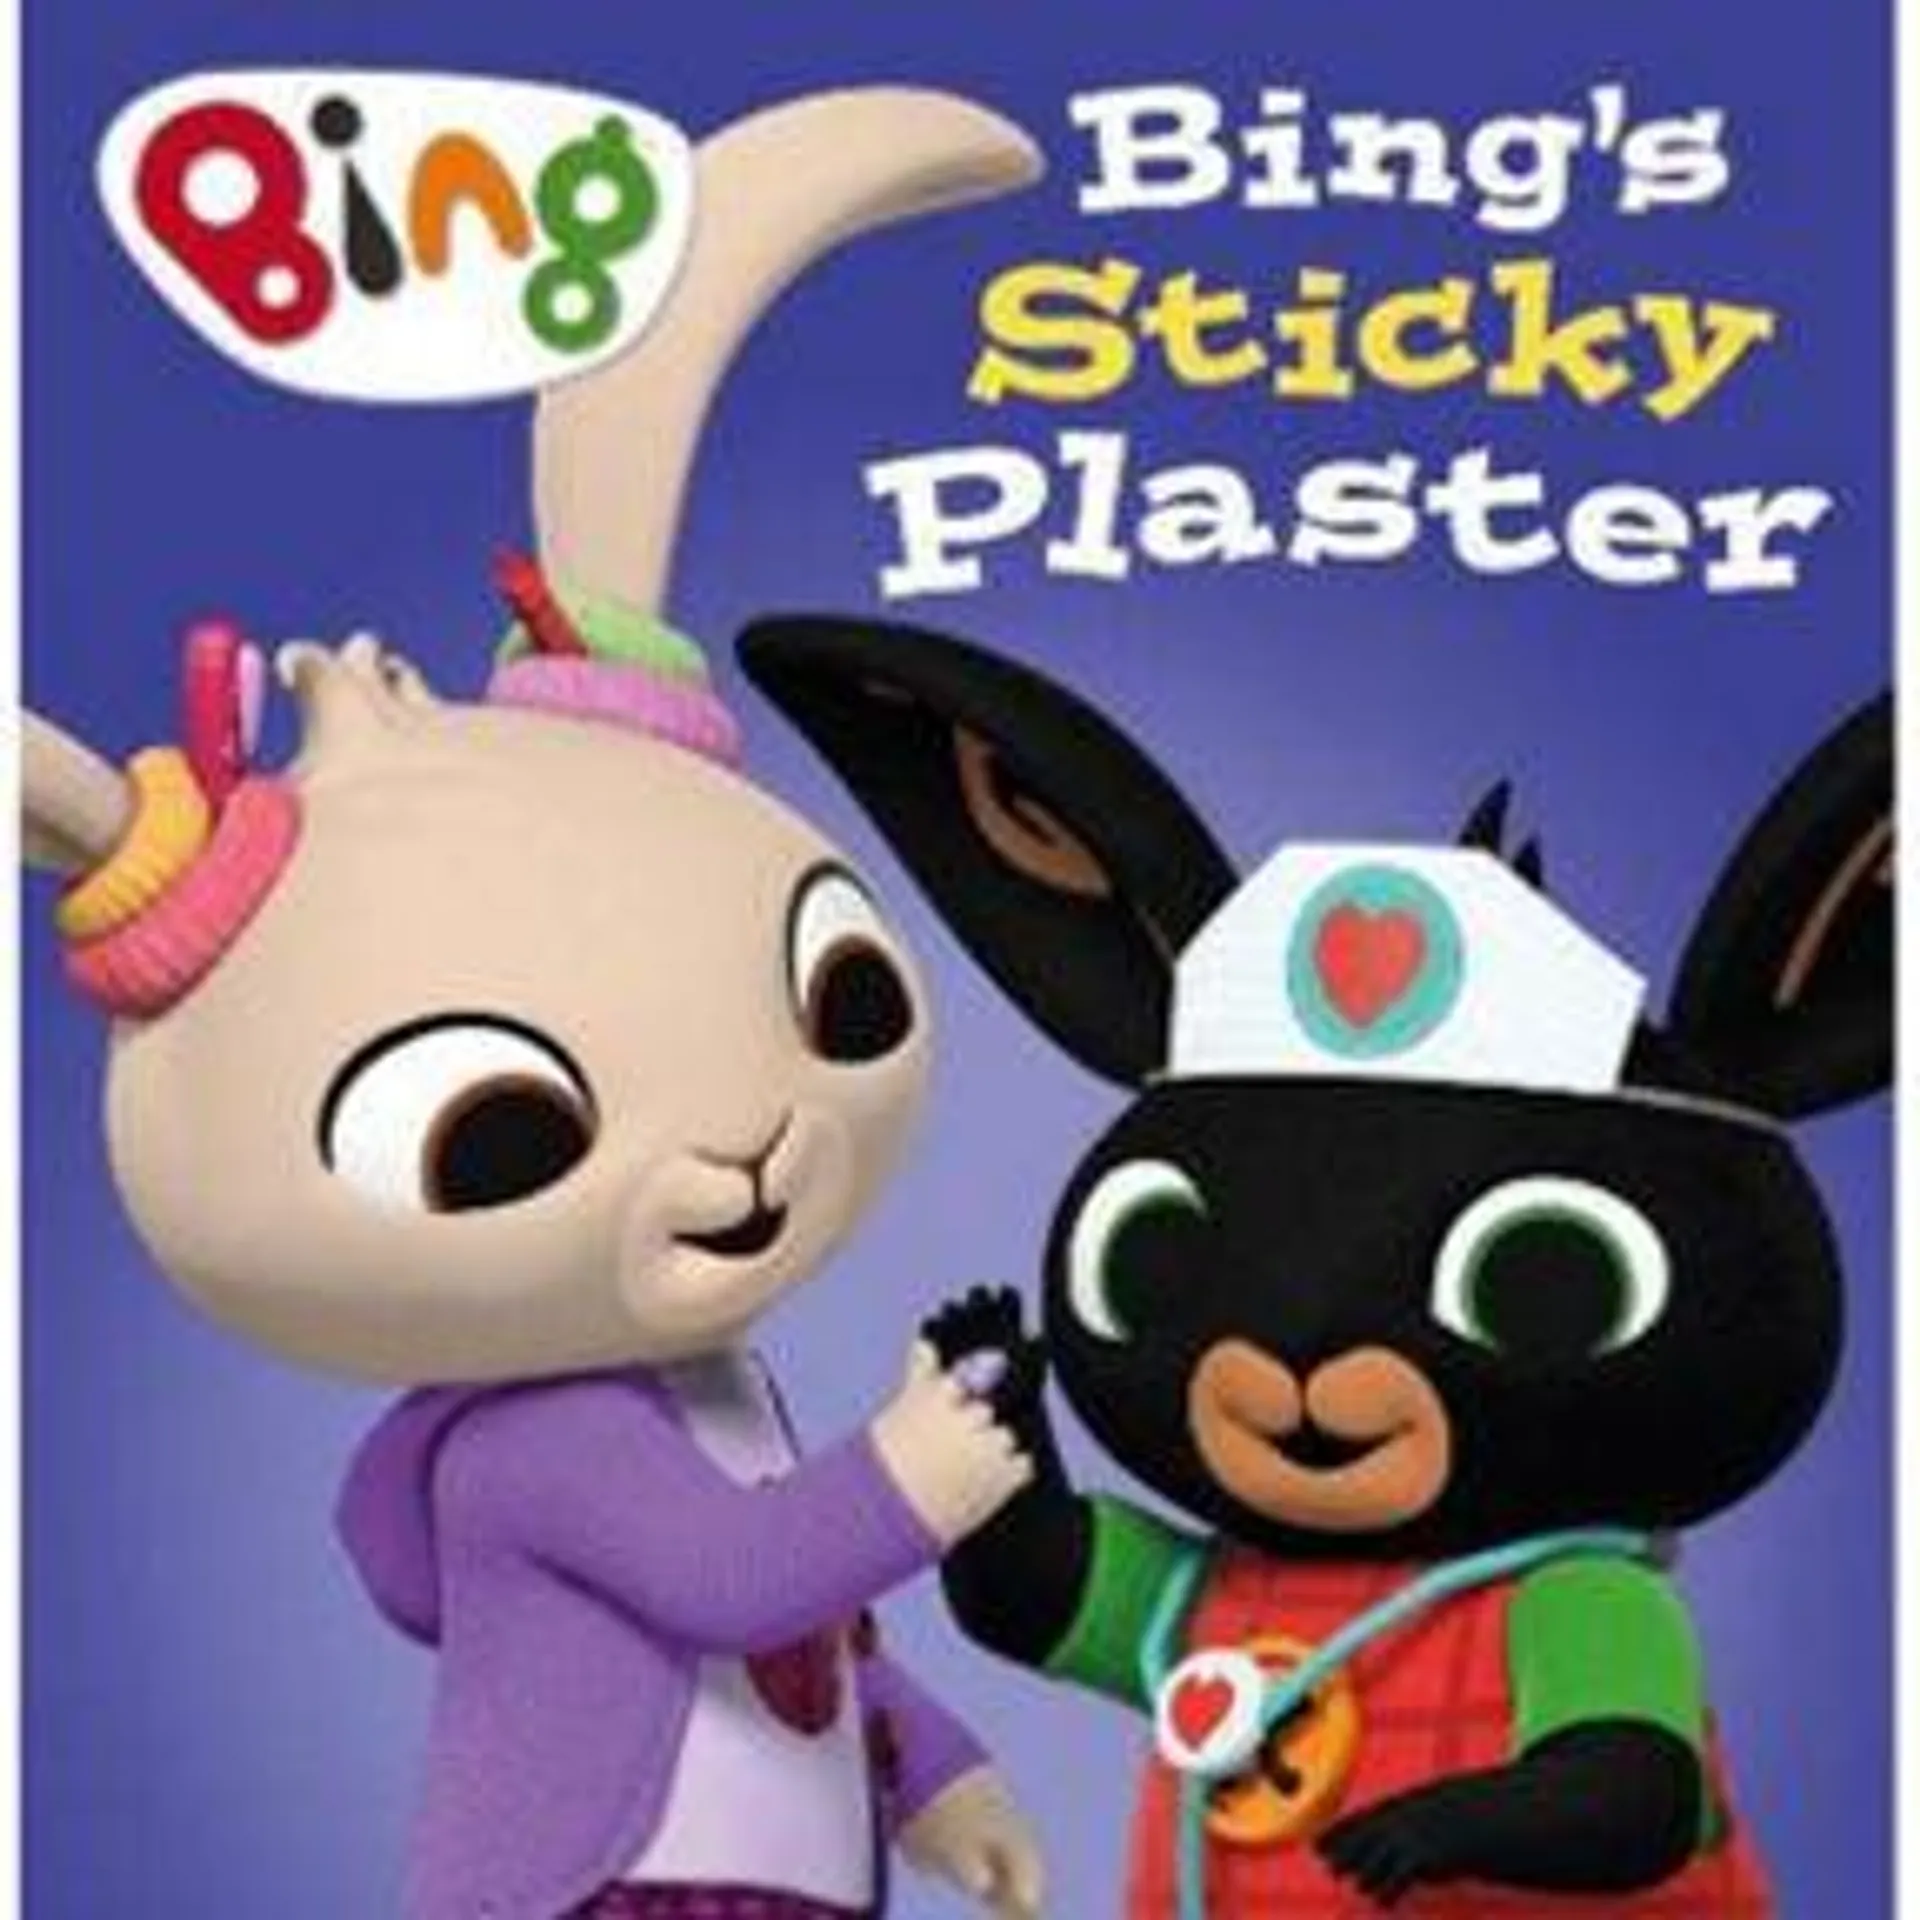 Bing's Sticky Plaster by HarperCollins Children's Books